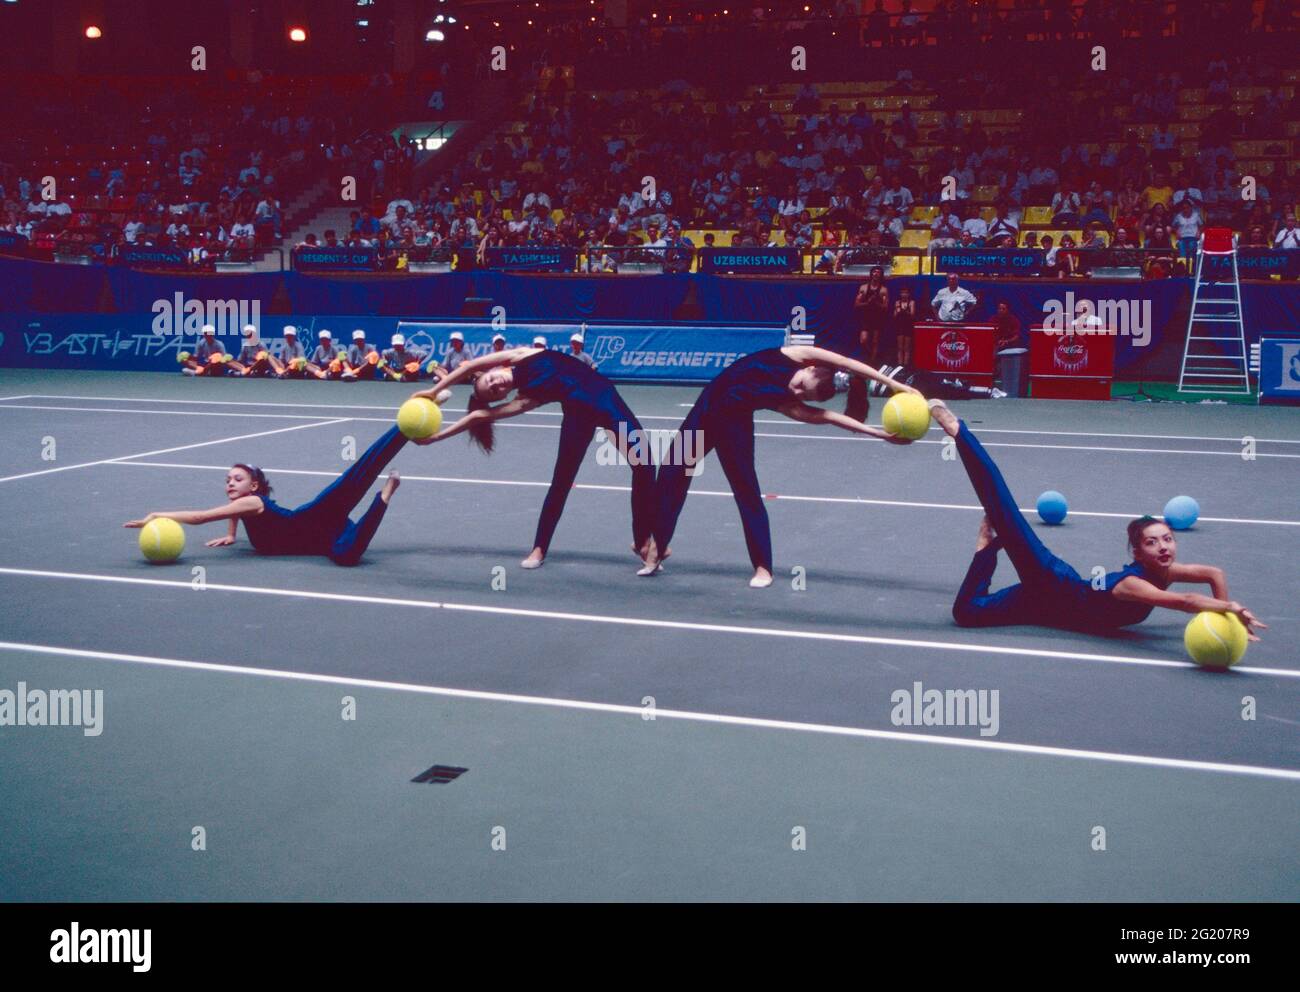 Gymnastic performance at the President's Cup tennis tournament, Uzbekistan 2000 Stock Photo